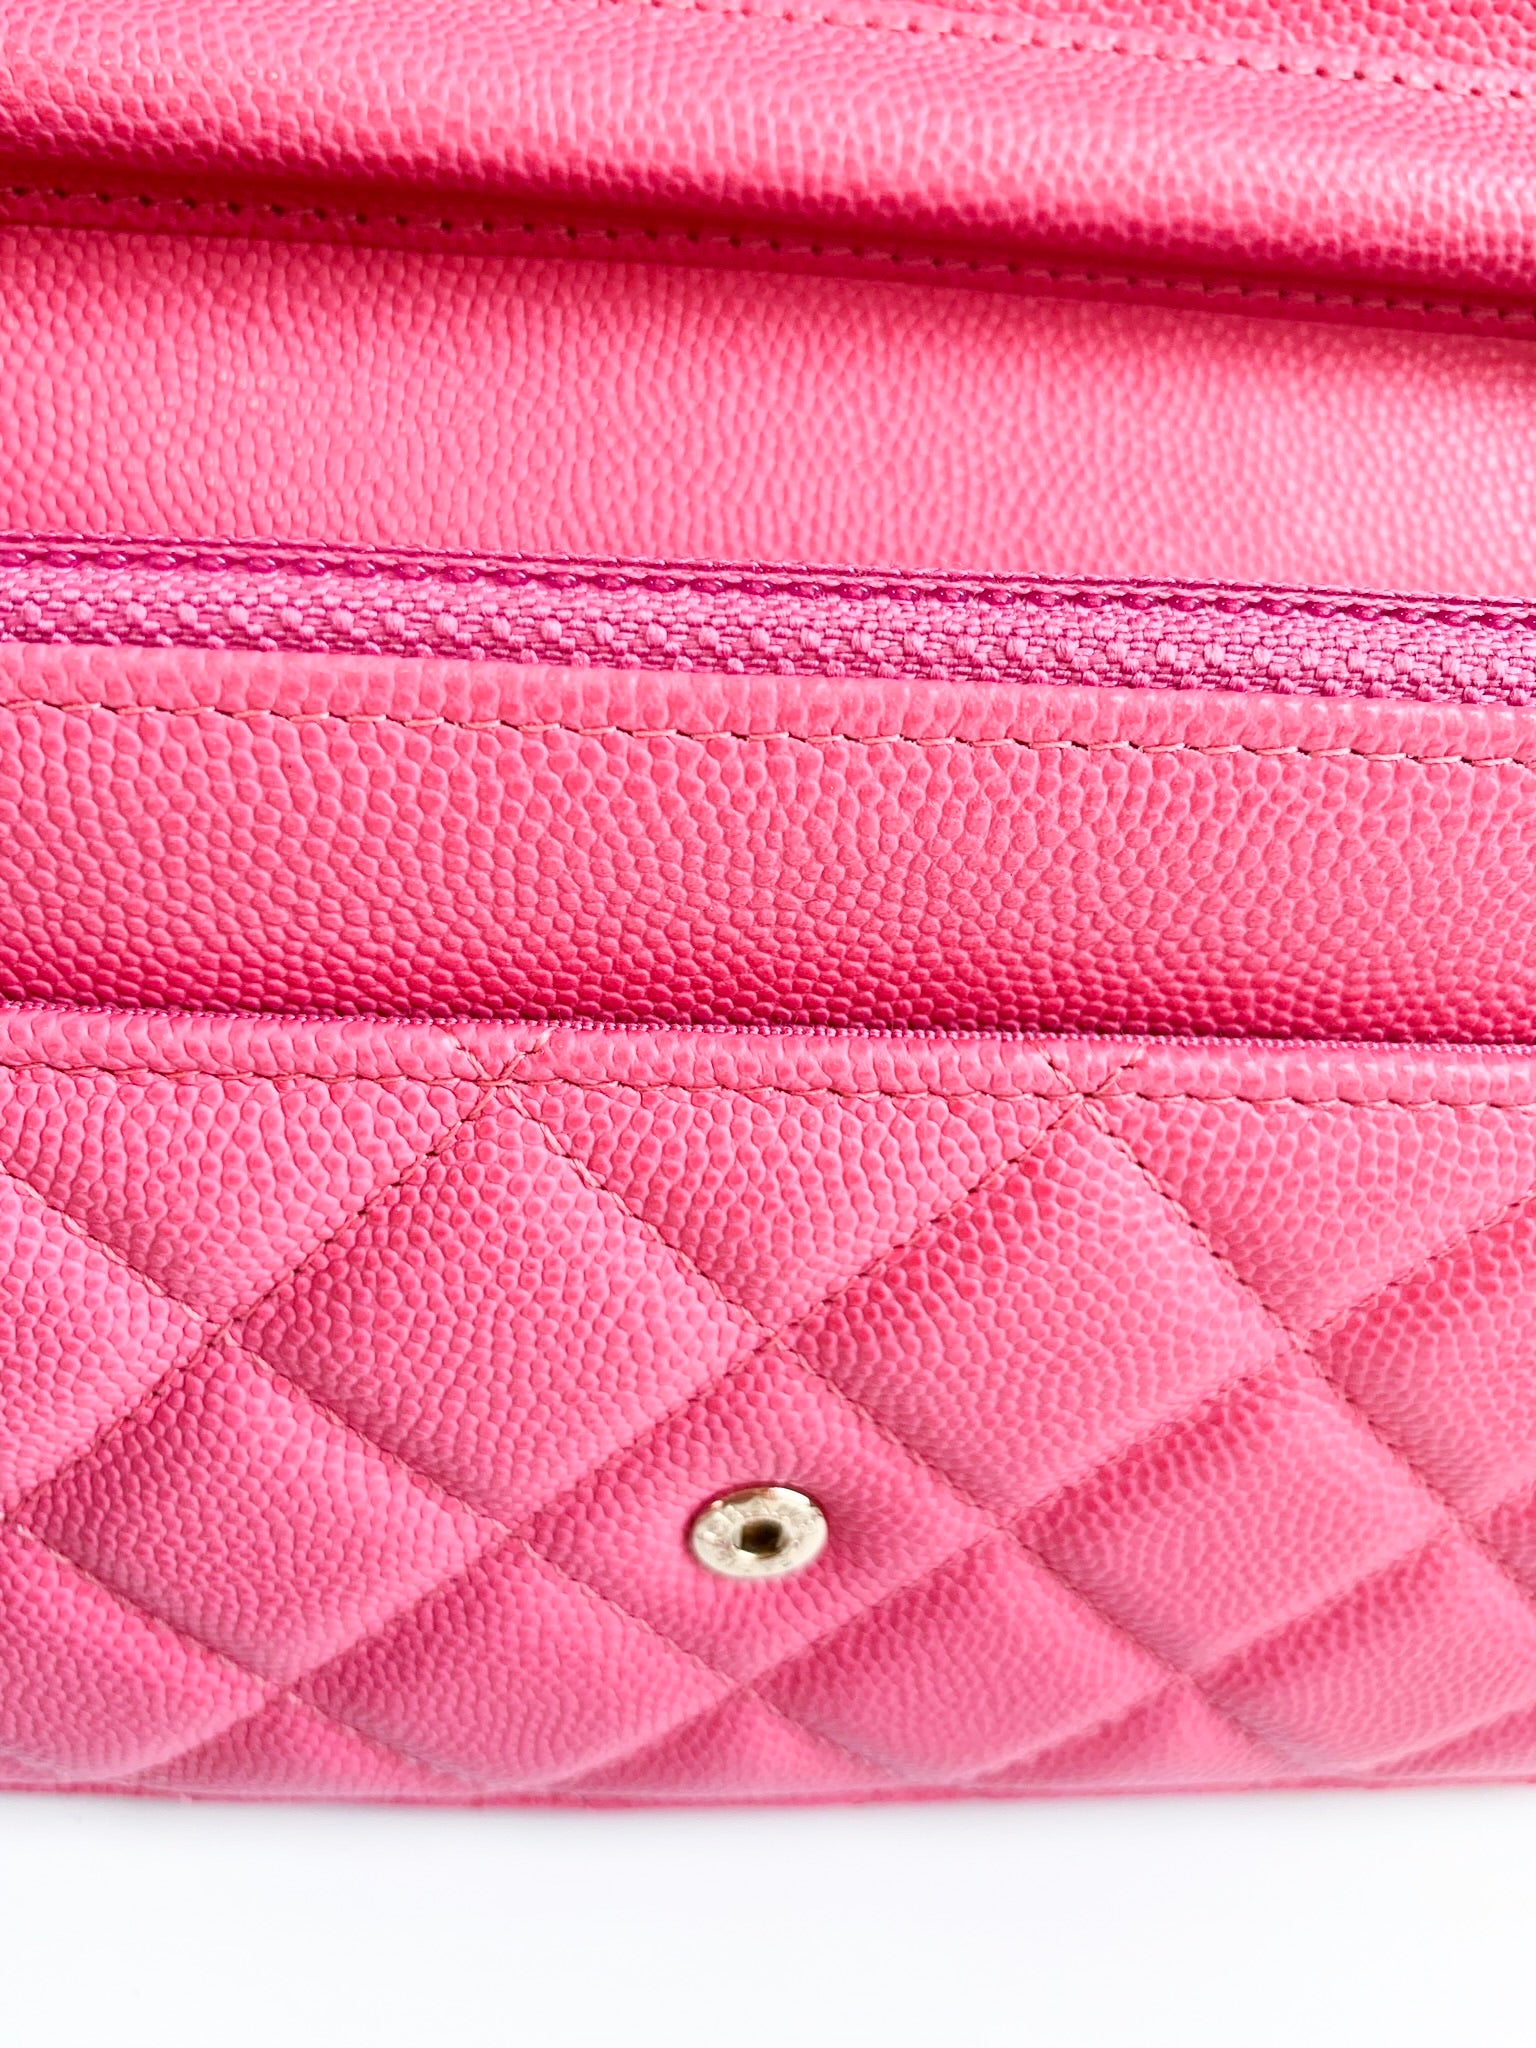 22P Chanel CC Vanity, Sakura Pink with Light Gold Hardware, Luxury